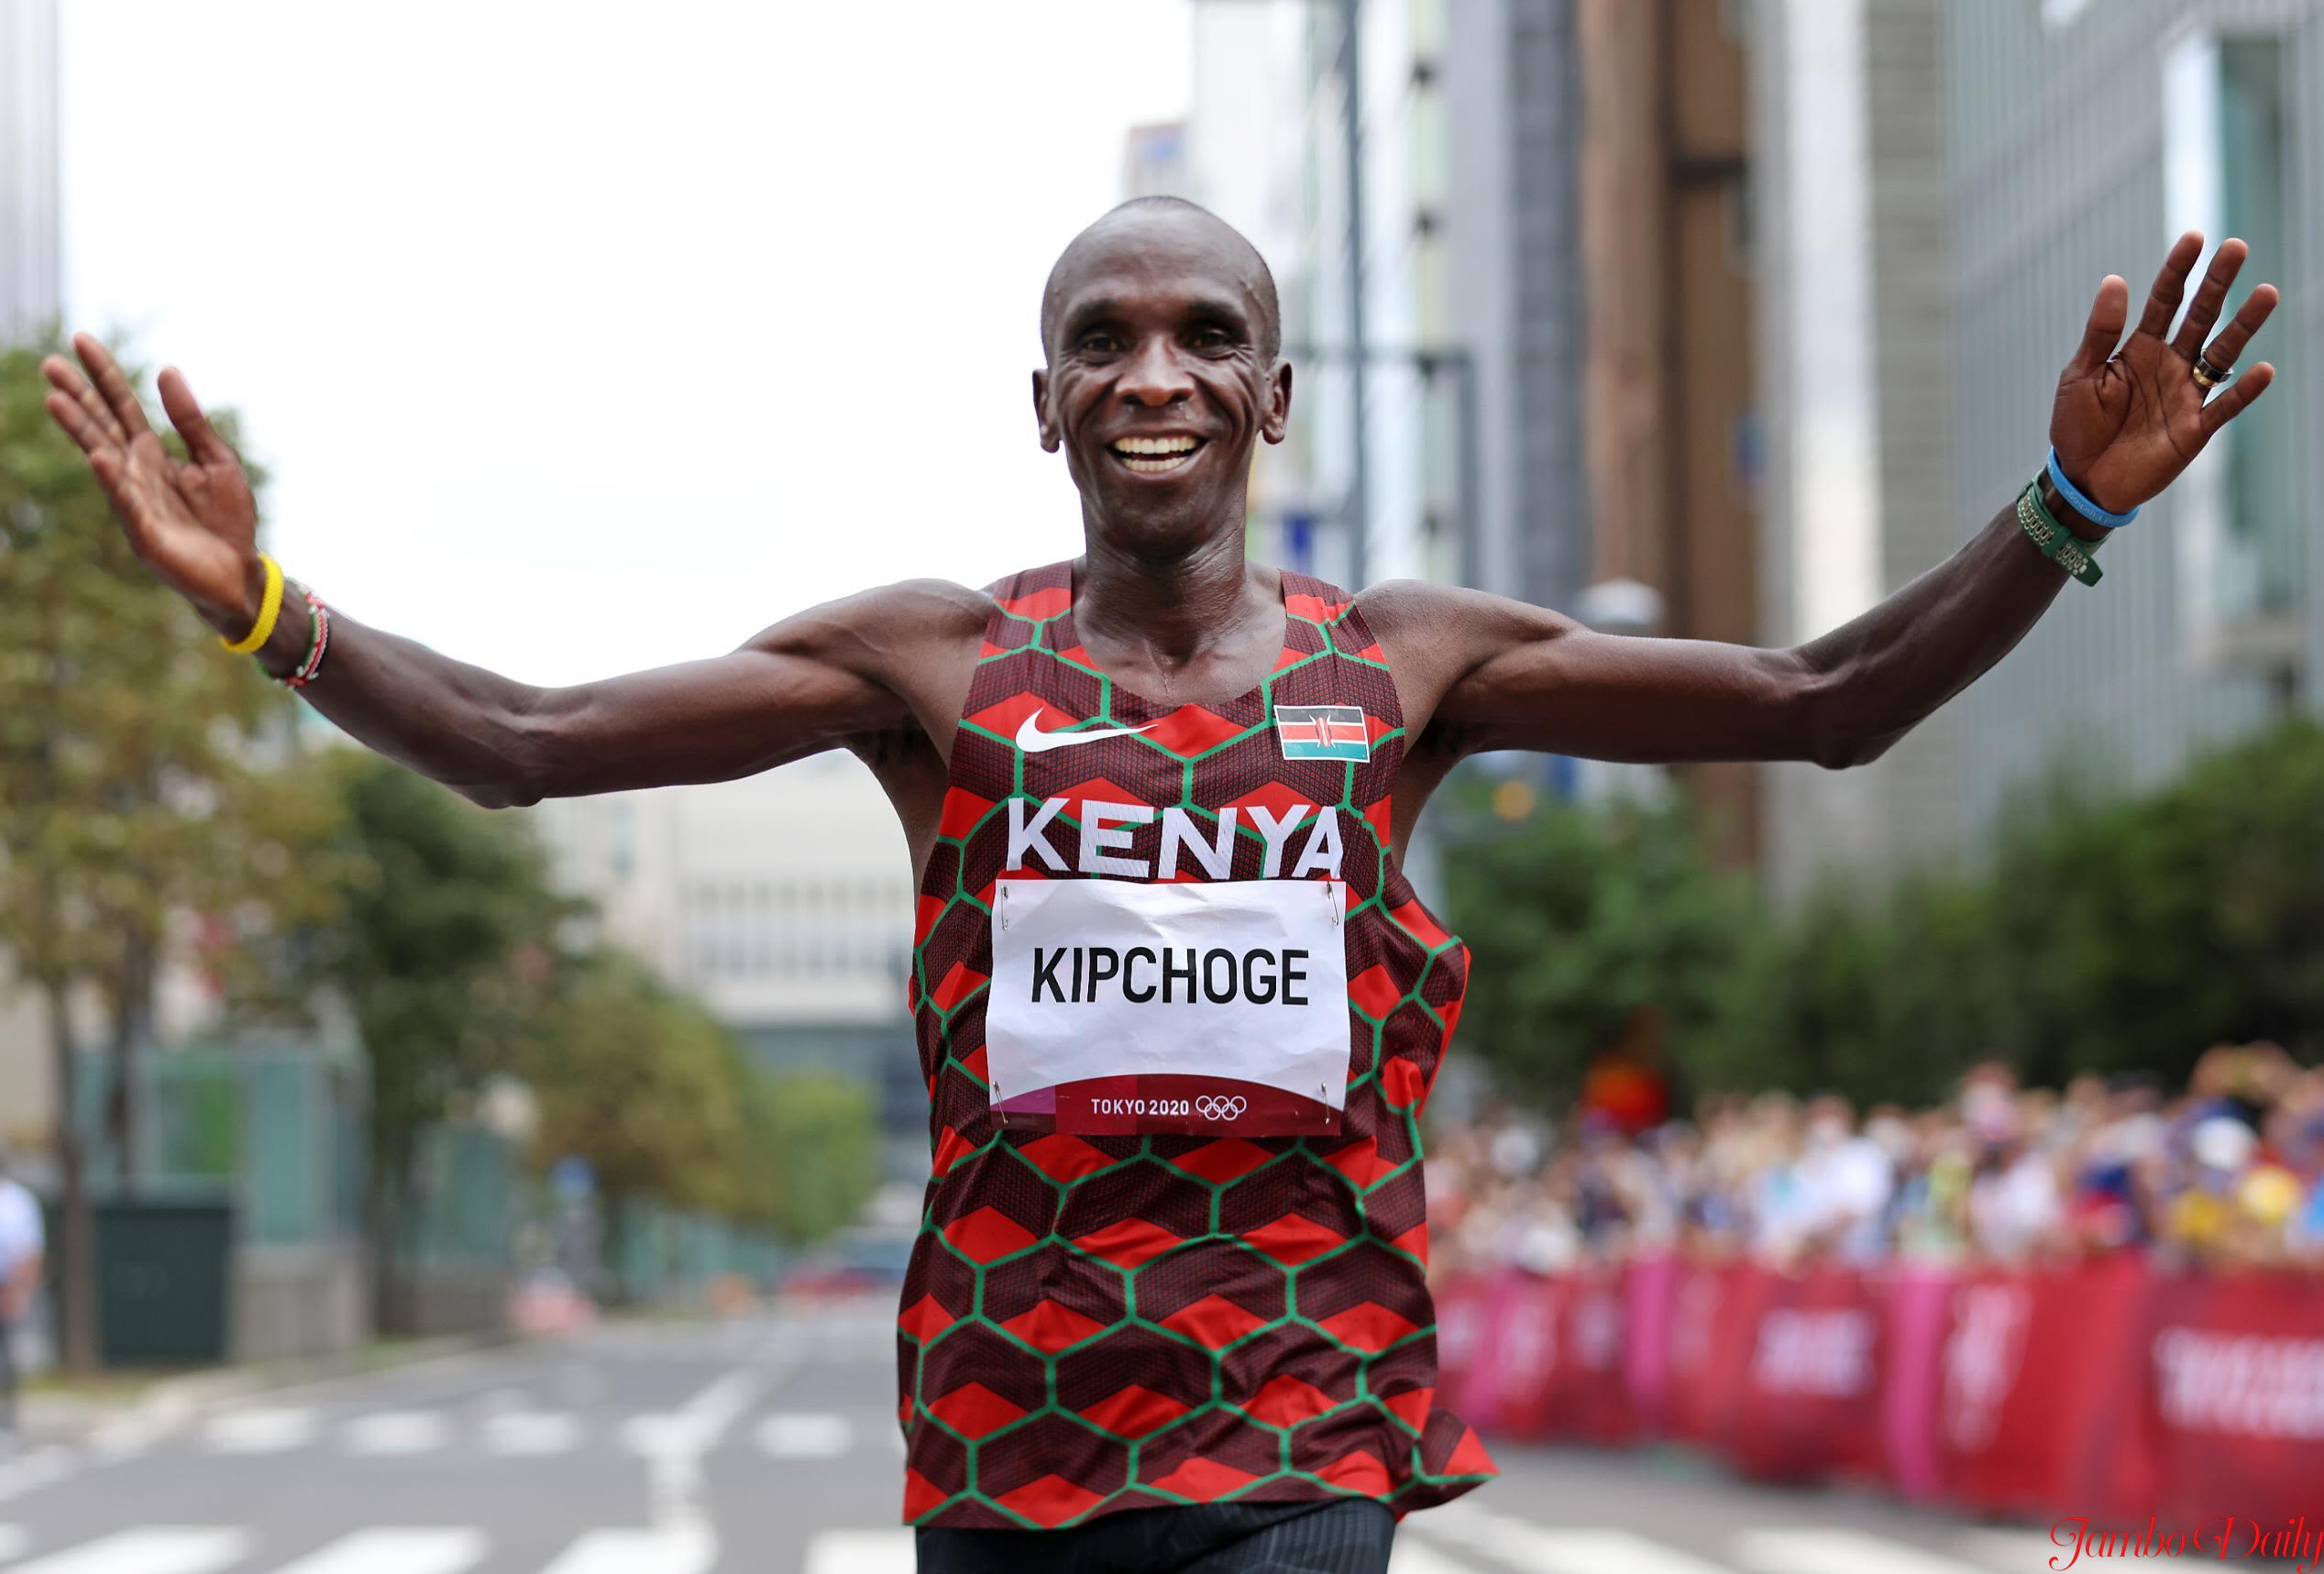 World Athletics Records Held by Kenyan Athletes